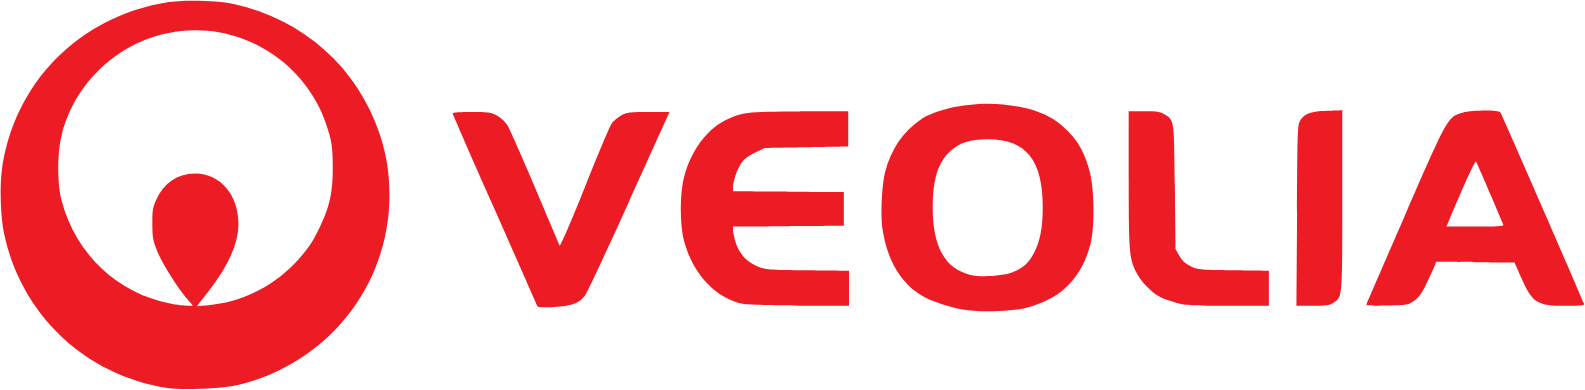 Veolia logo large (transparent PNG)